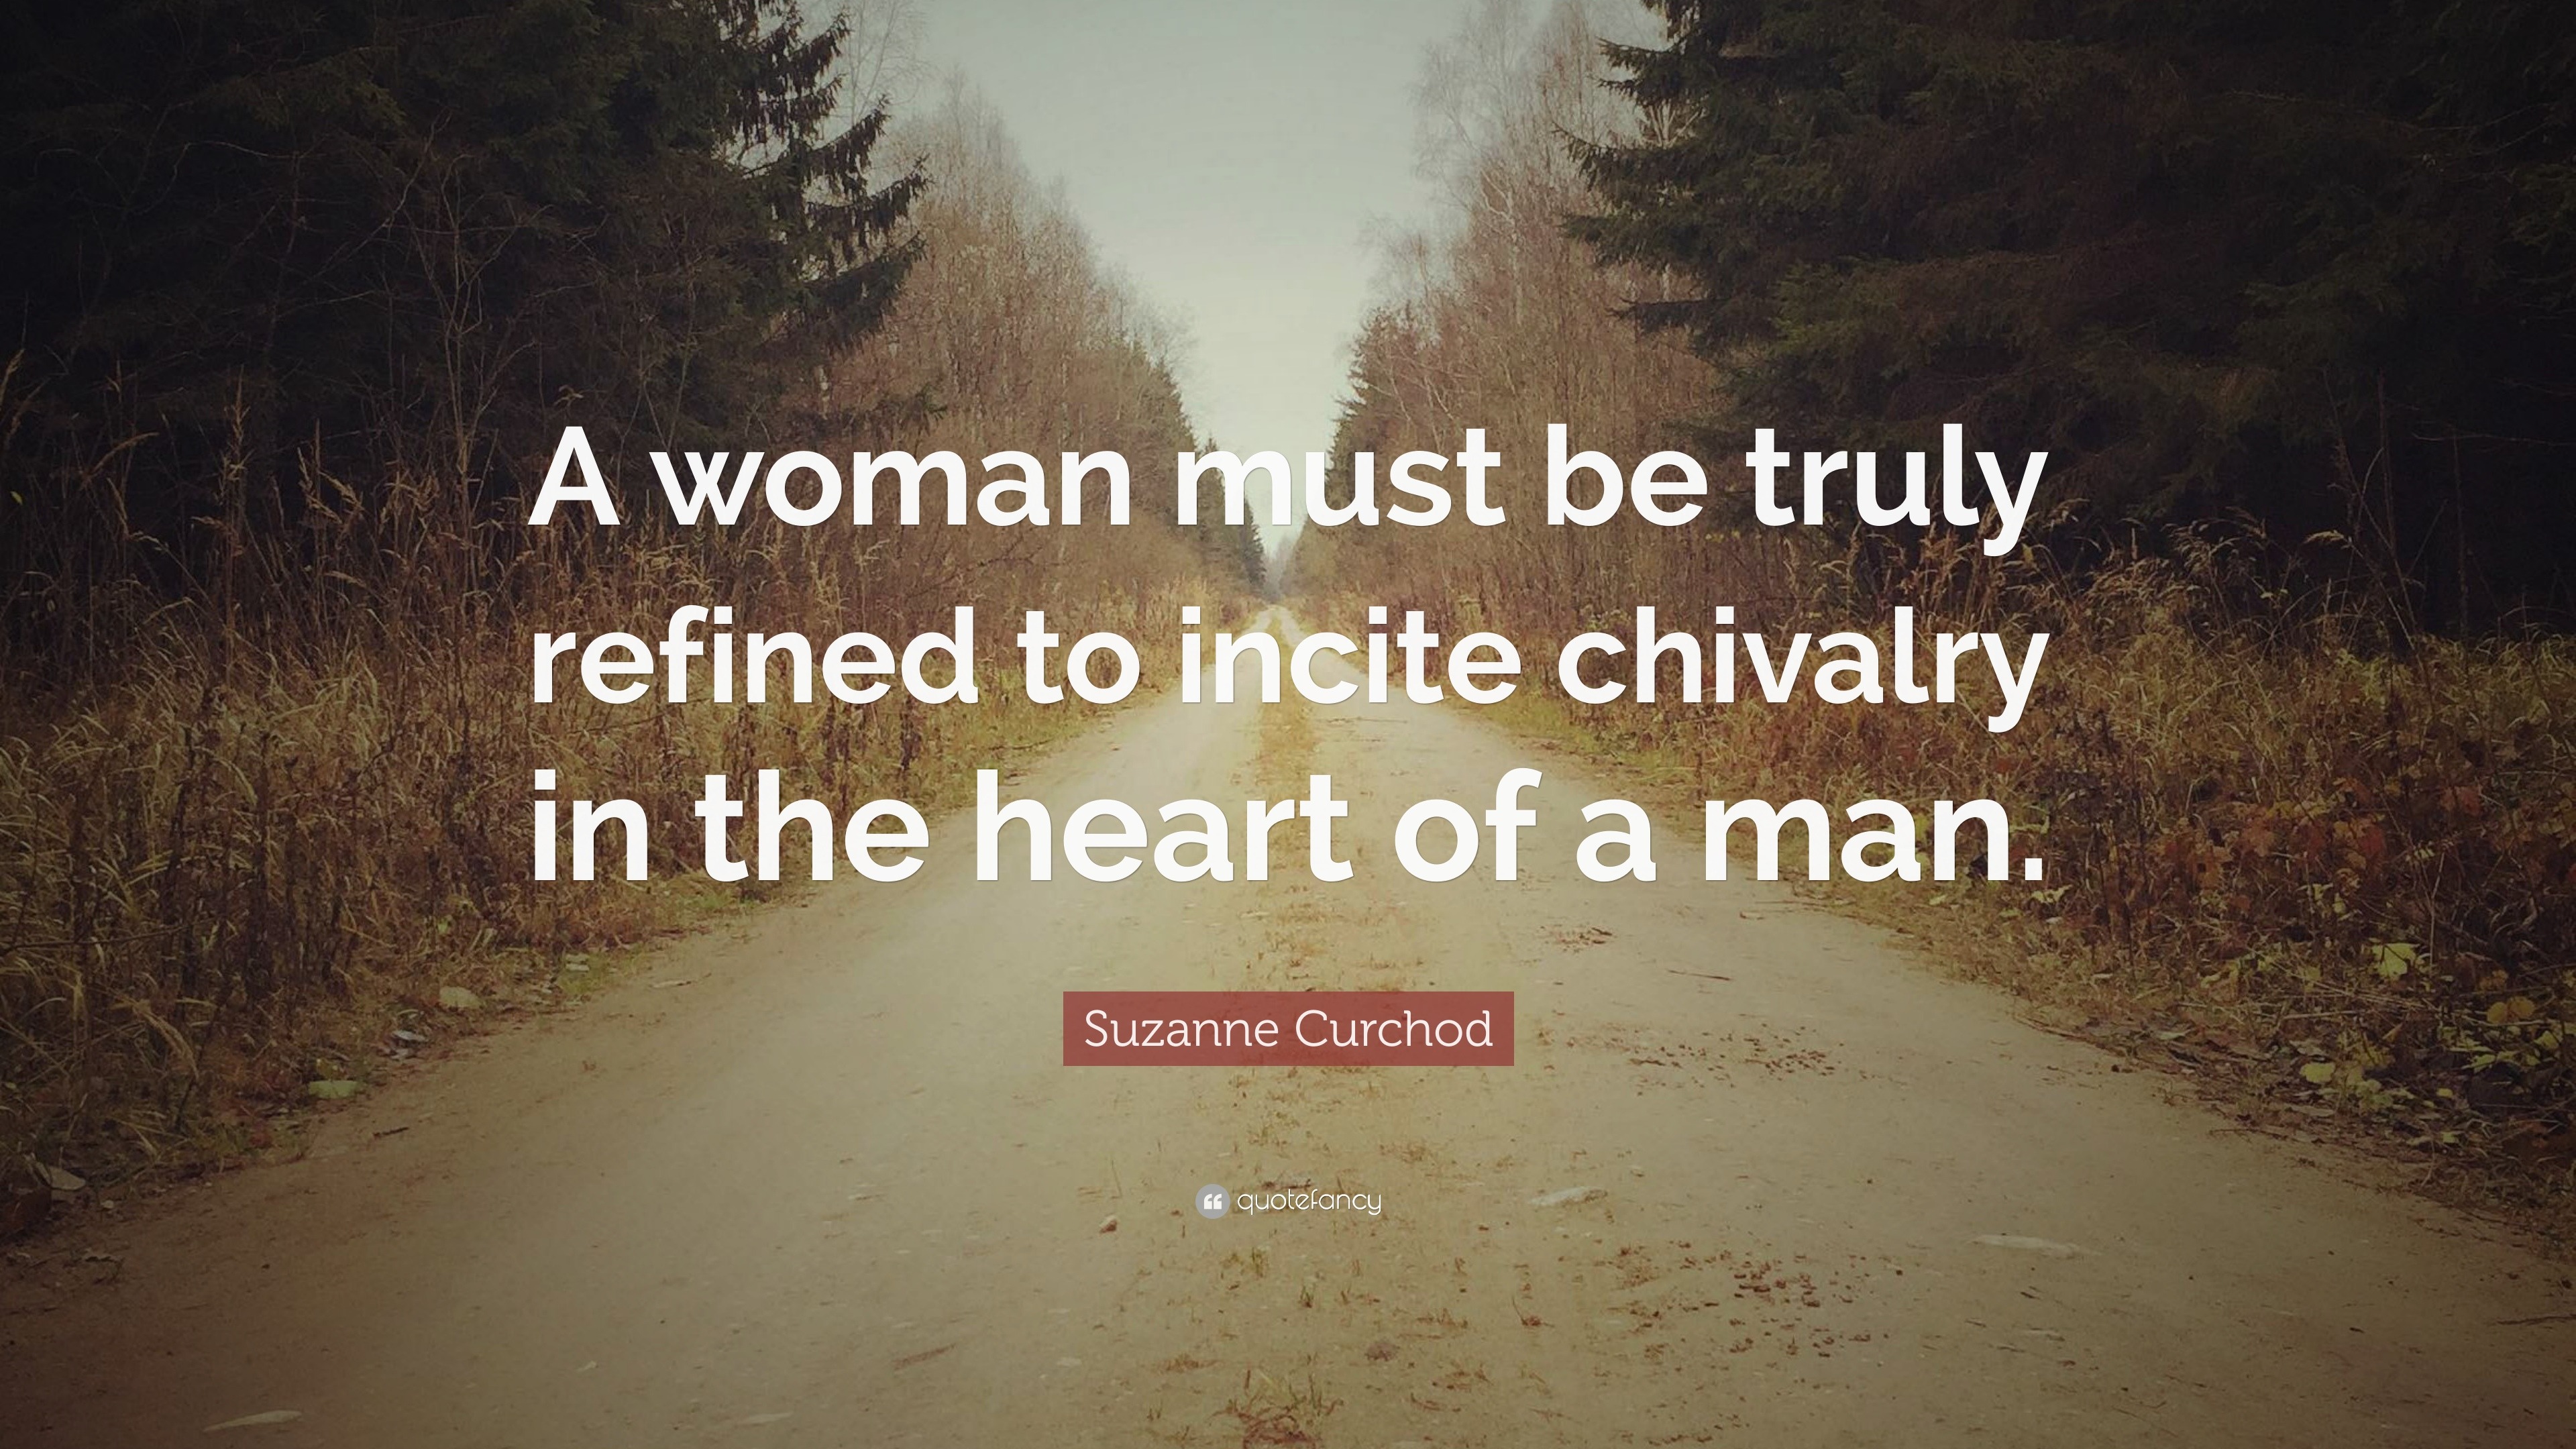 chivalry towards women quotes